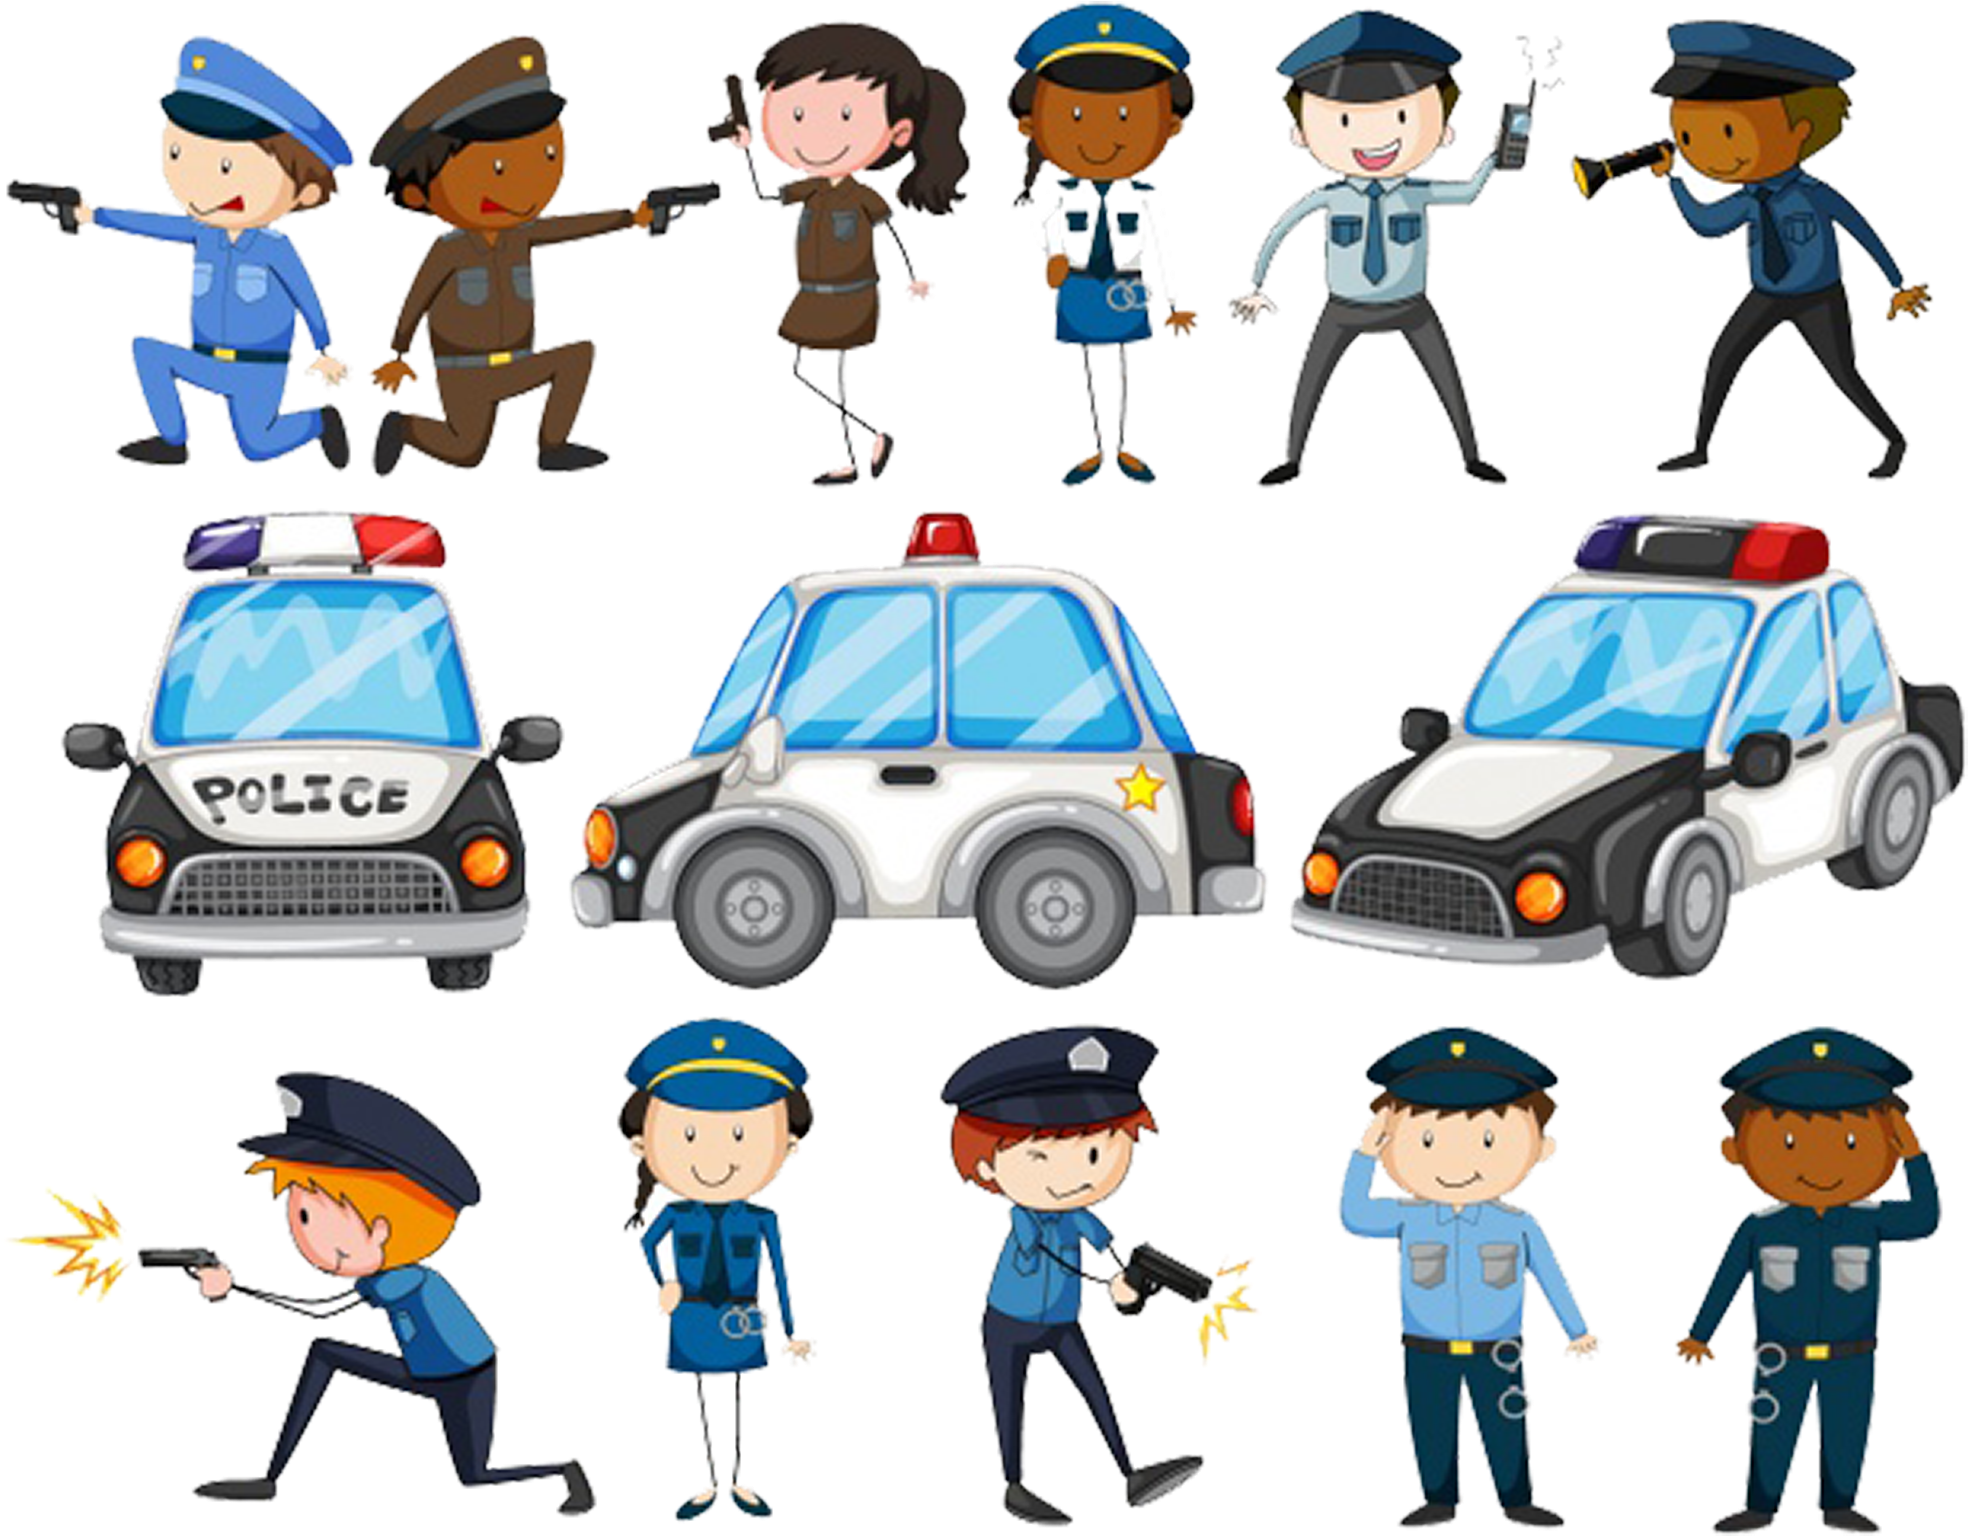 Police Officer Royalty Free Illustration - Police Officer Royalty Free Illustration (2001x2001)